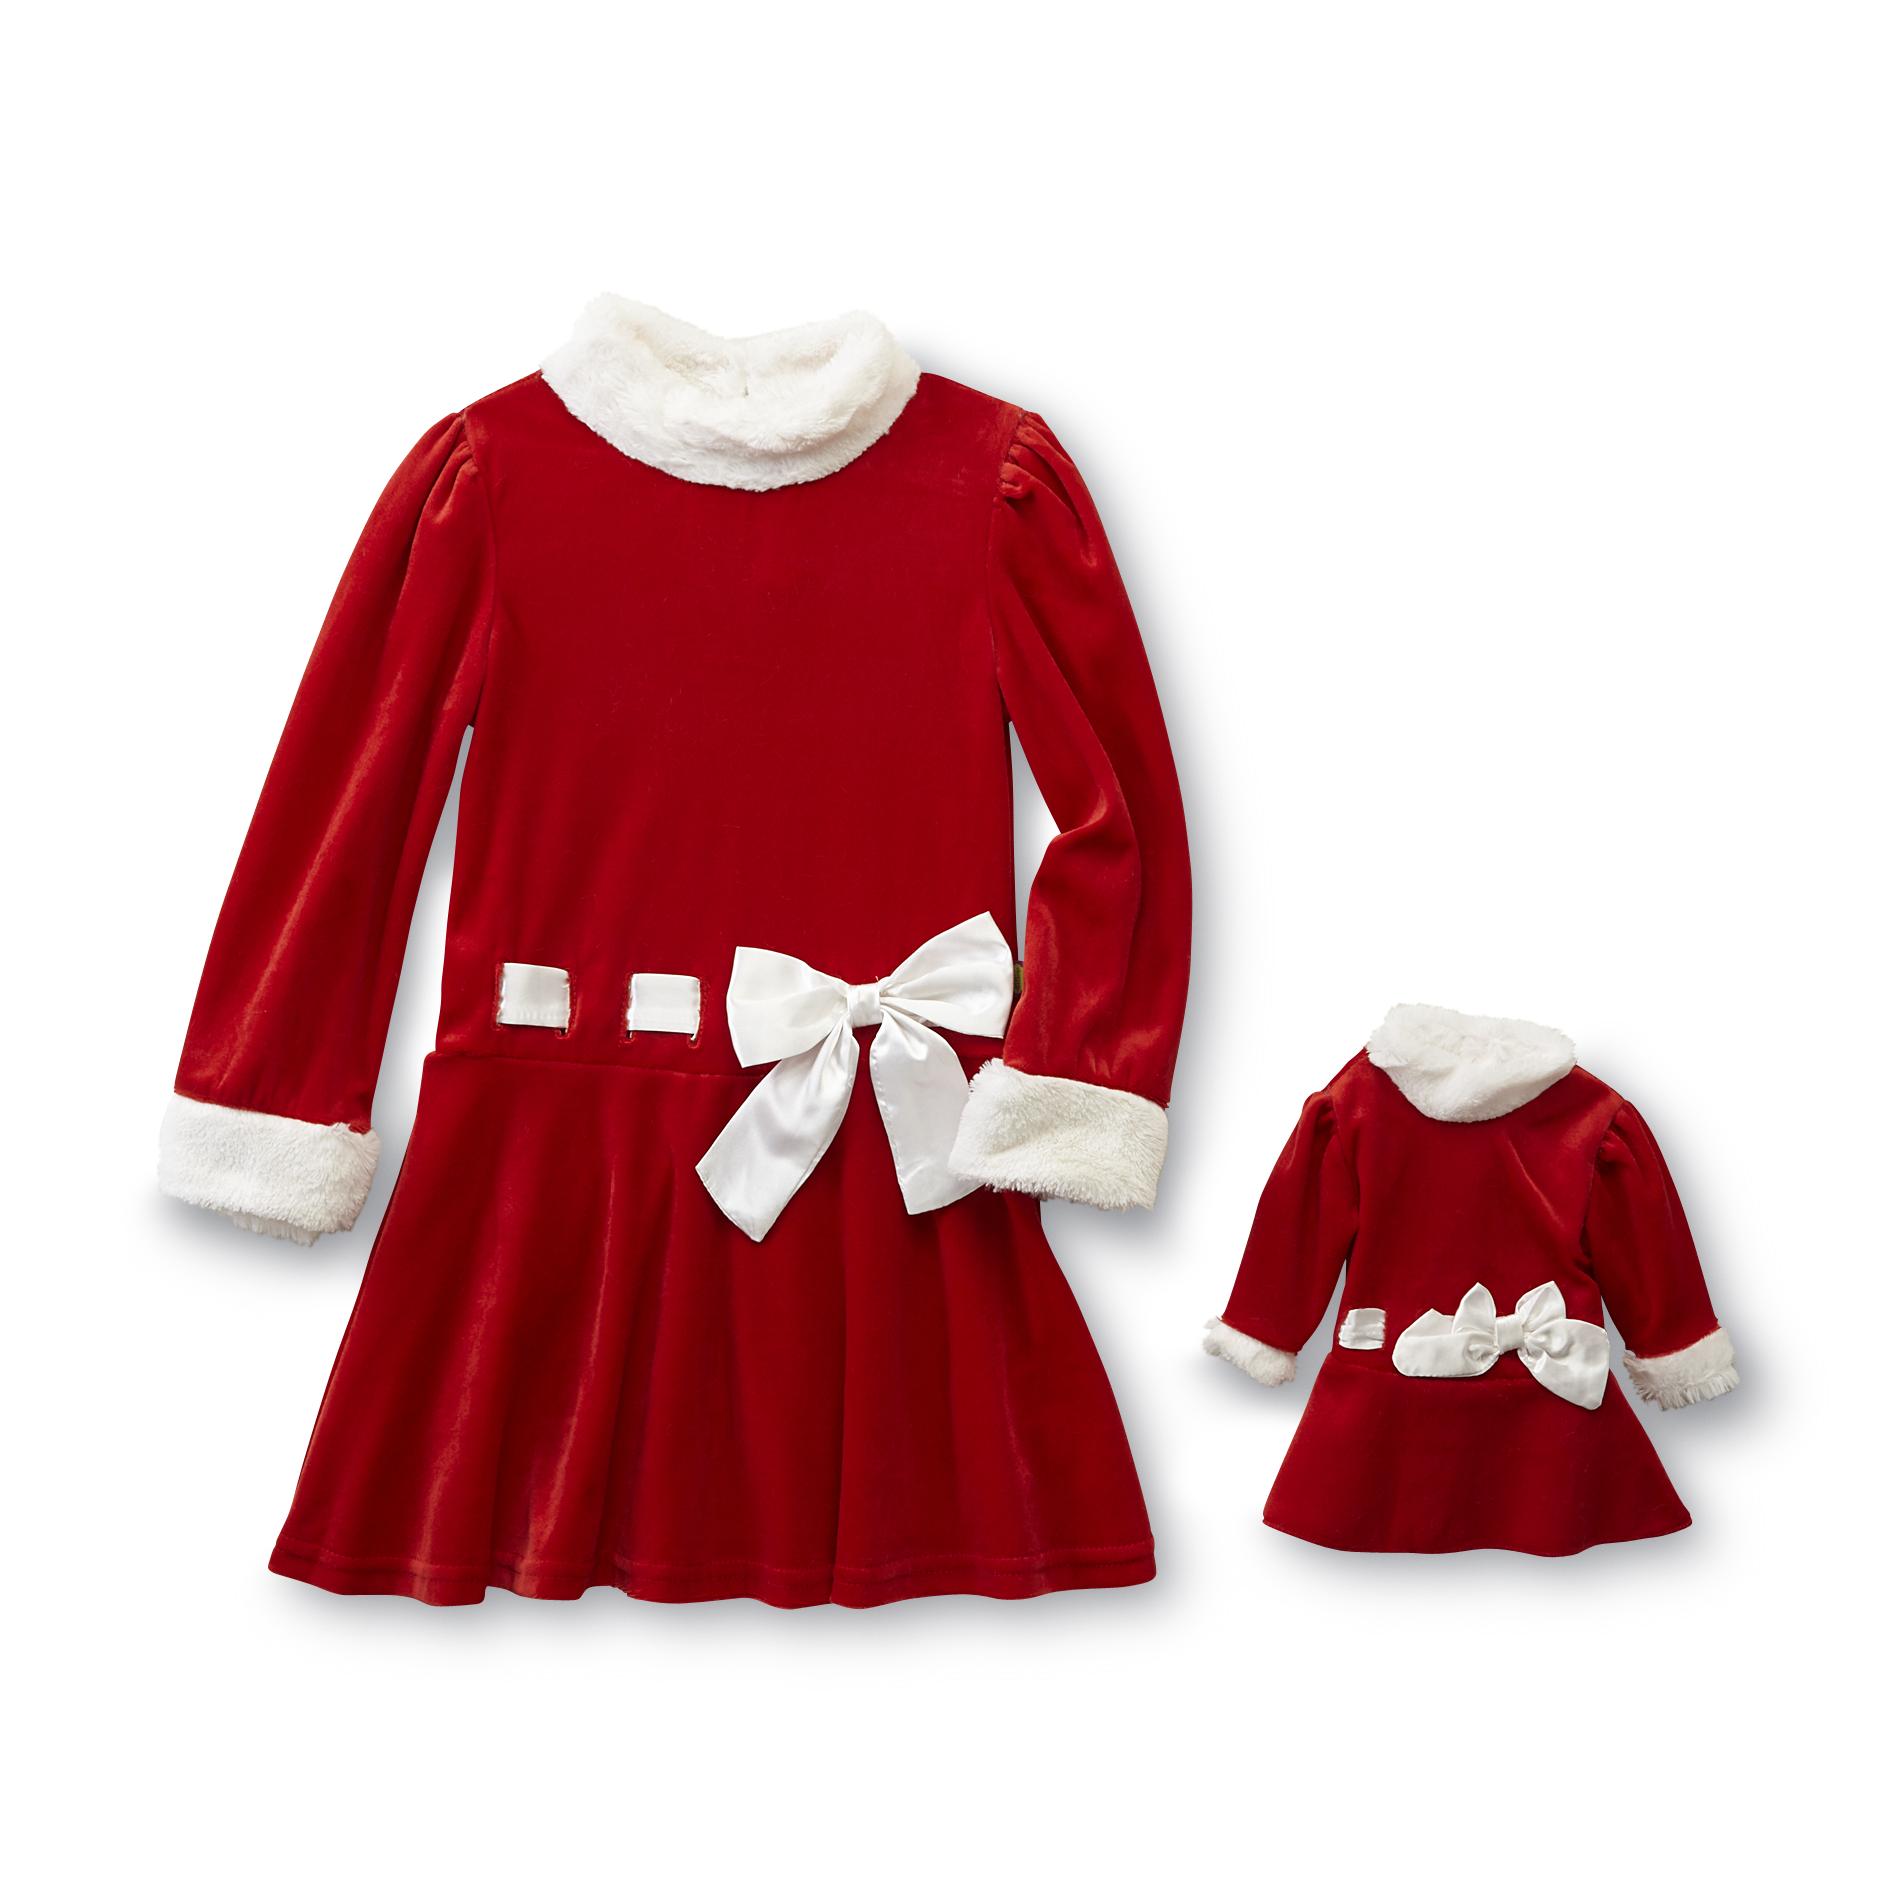 Dollie & Me Girl's Christmas Dress & Doll Outfit - Santa